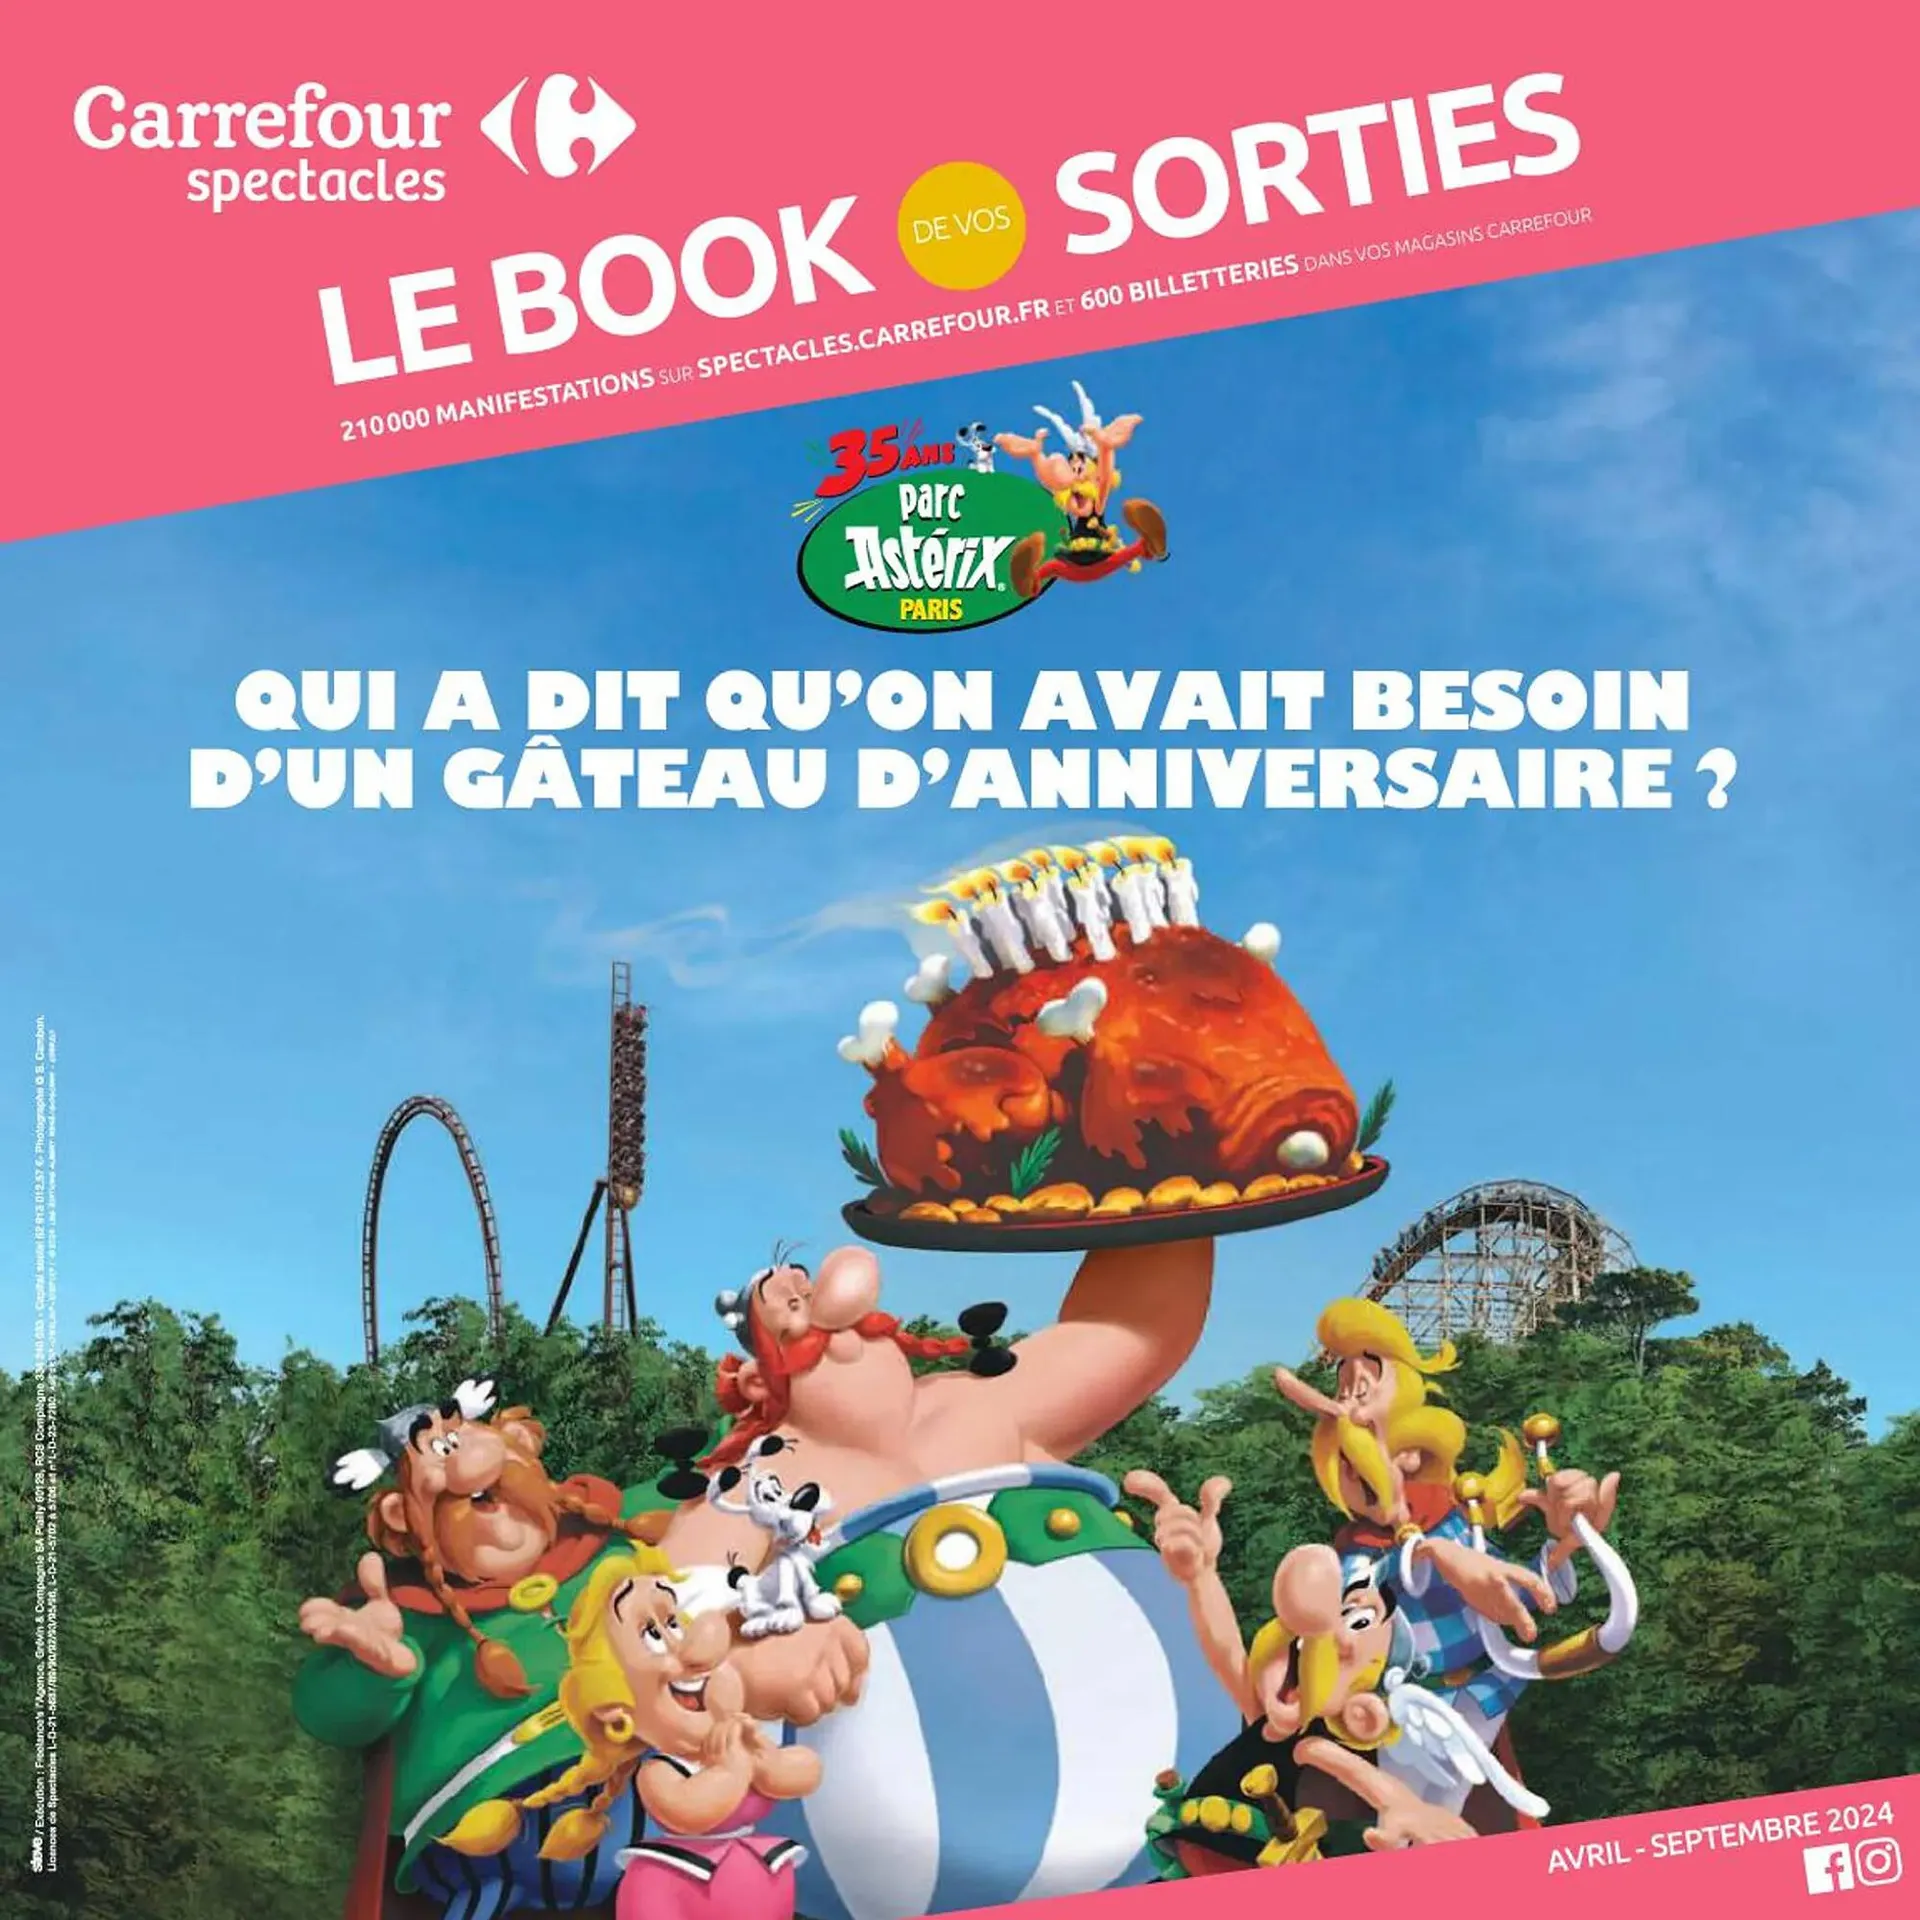 Catalogue Carrefour spectacles - 1